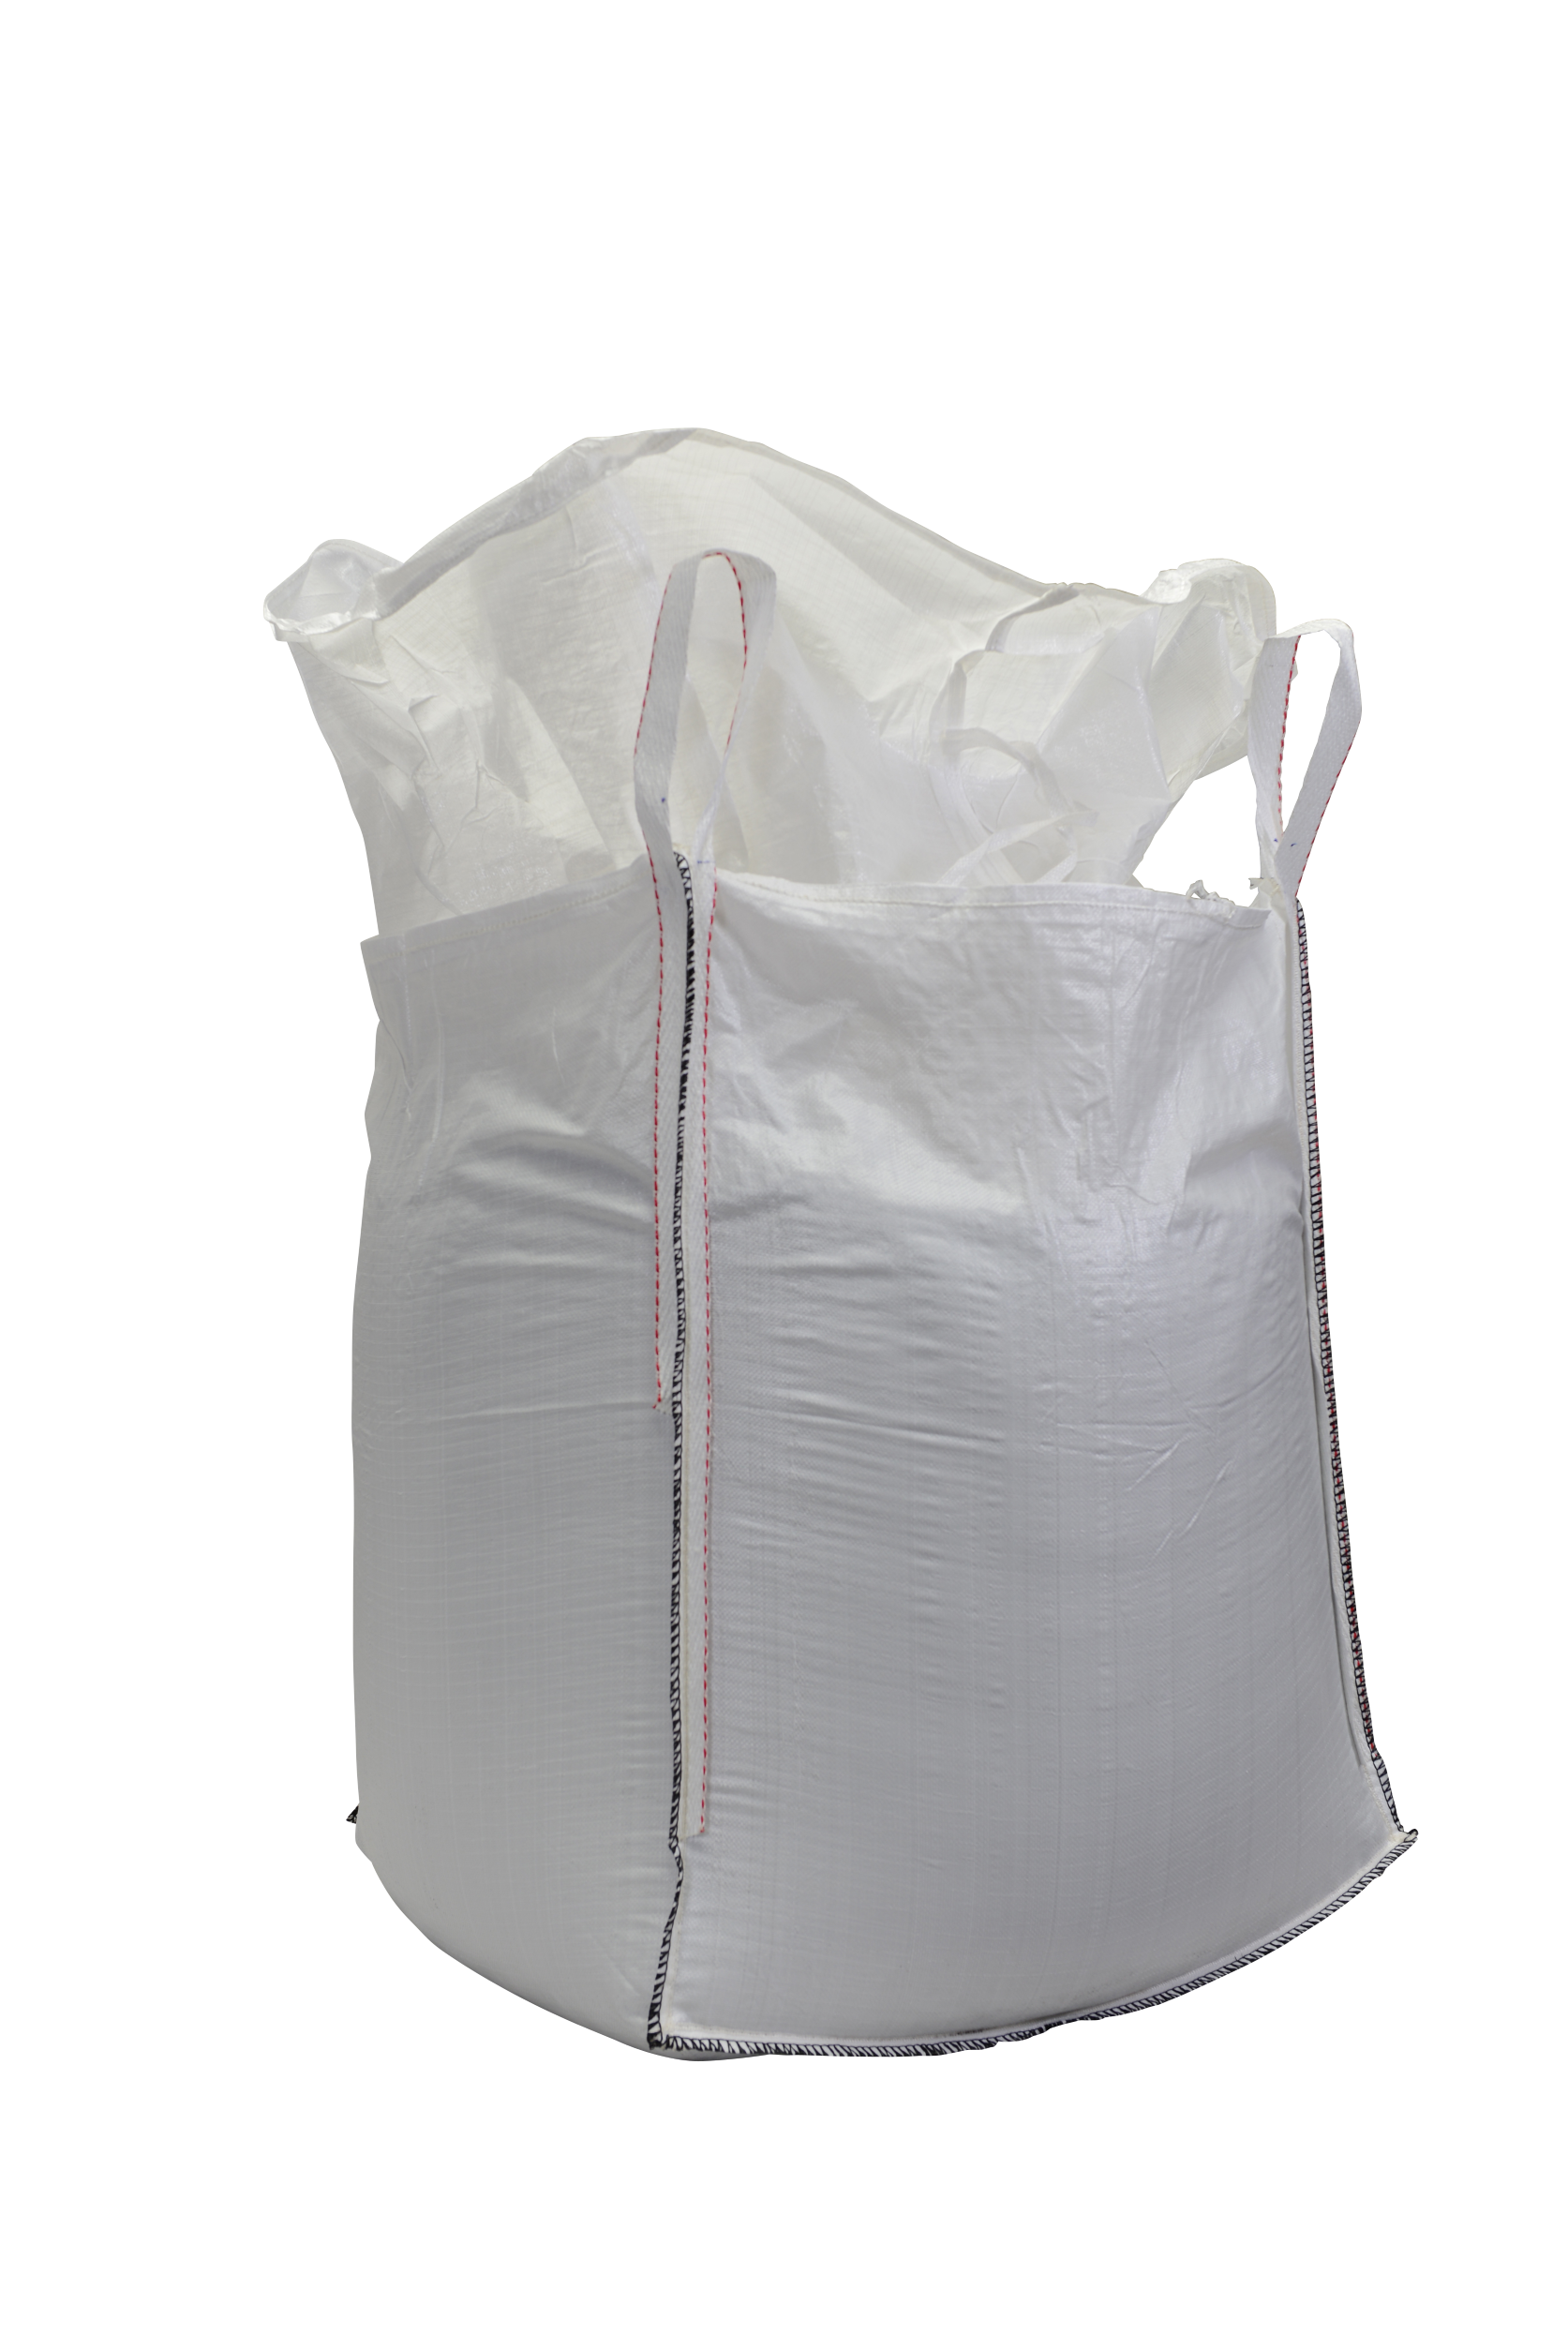 Big bag - 87x87x110 cm - eikenprocessierups